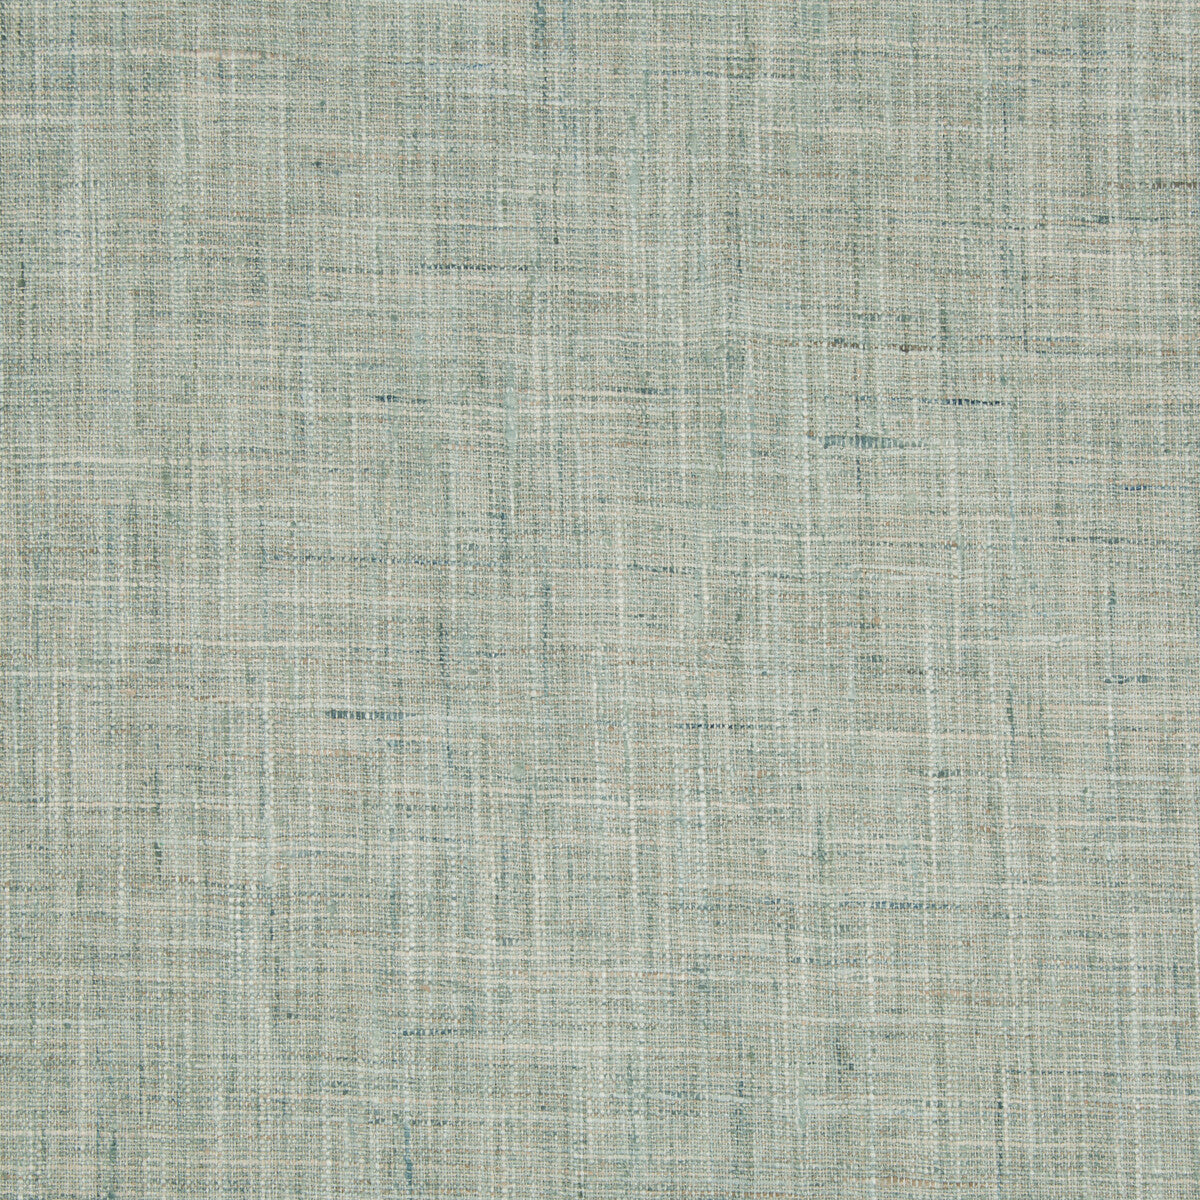 Kravet Smart fabric in 34983-13 color - pattern 34983.13.0 - by Kravet Smart